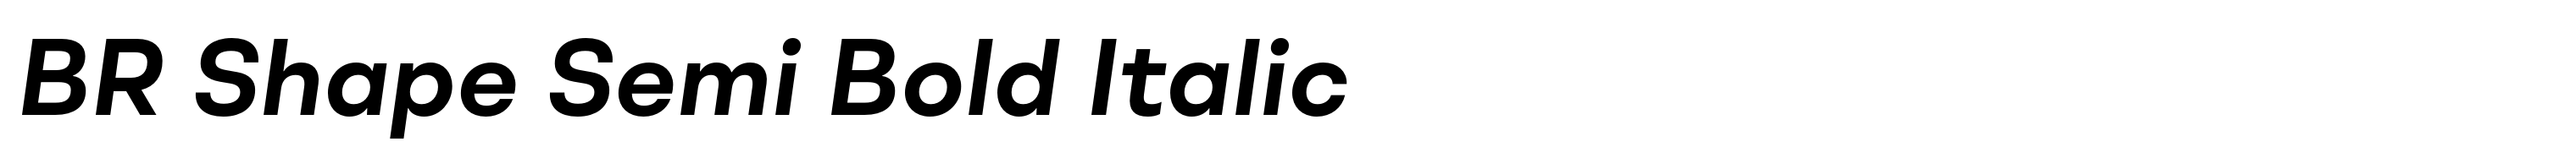 BR Shape Semi Bold Italic